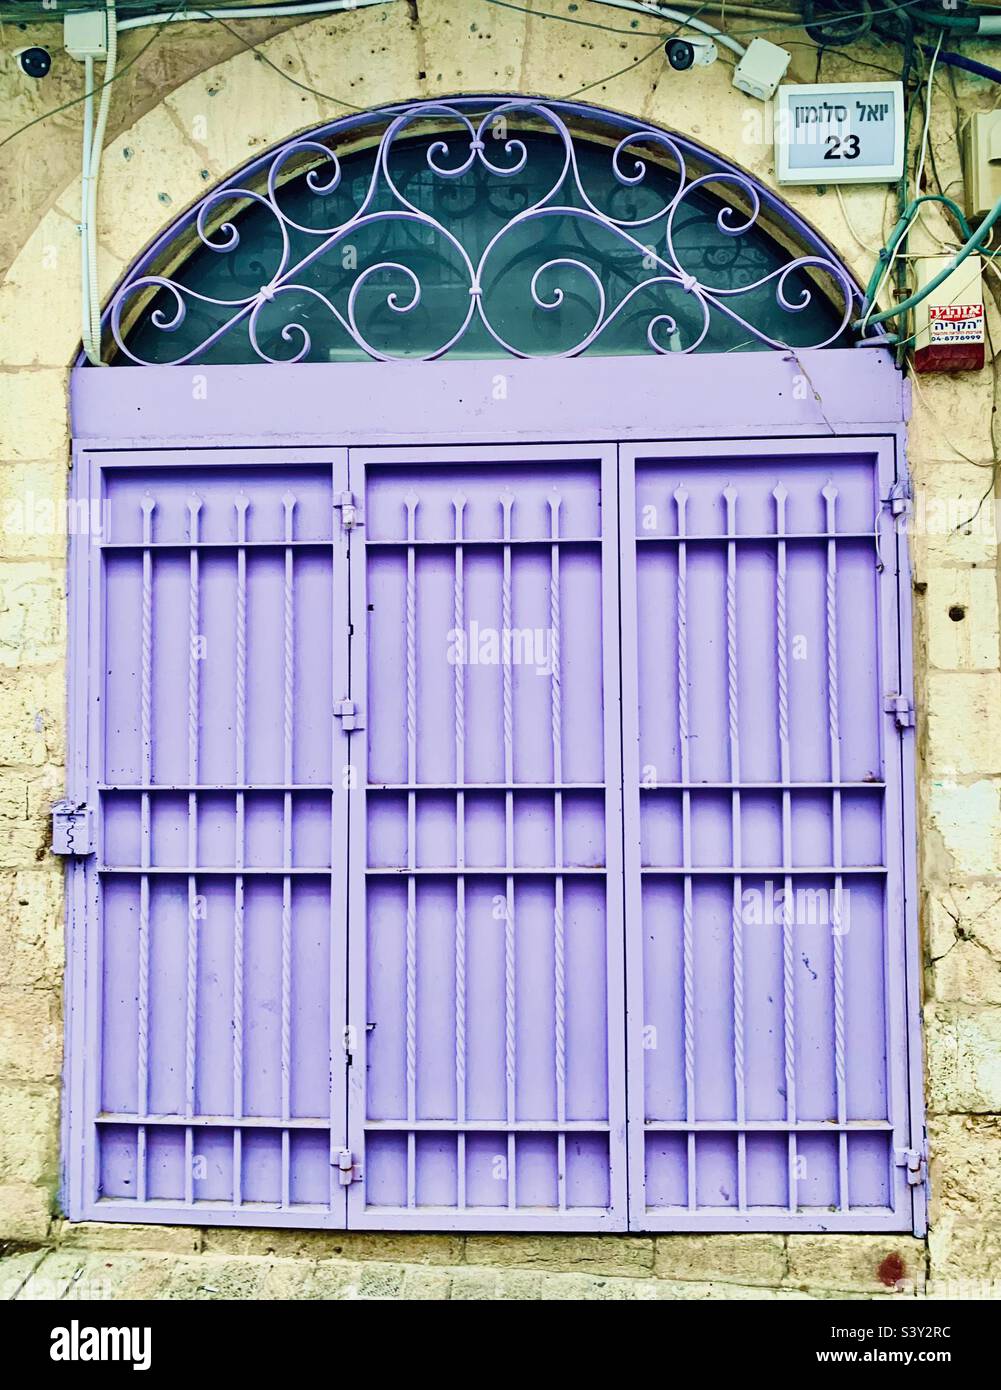 Beautiful doors and windows in Nahalat Shiv’a neighborhood in Jerusalem. Stock Photo